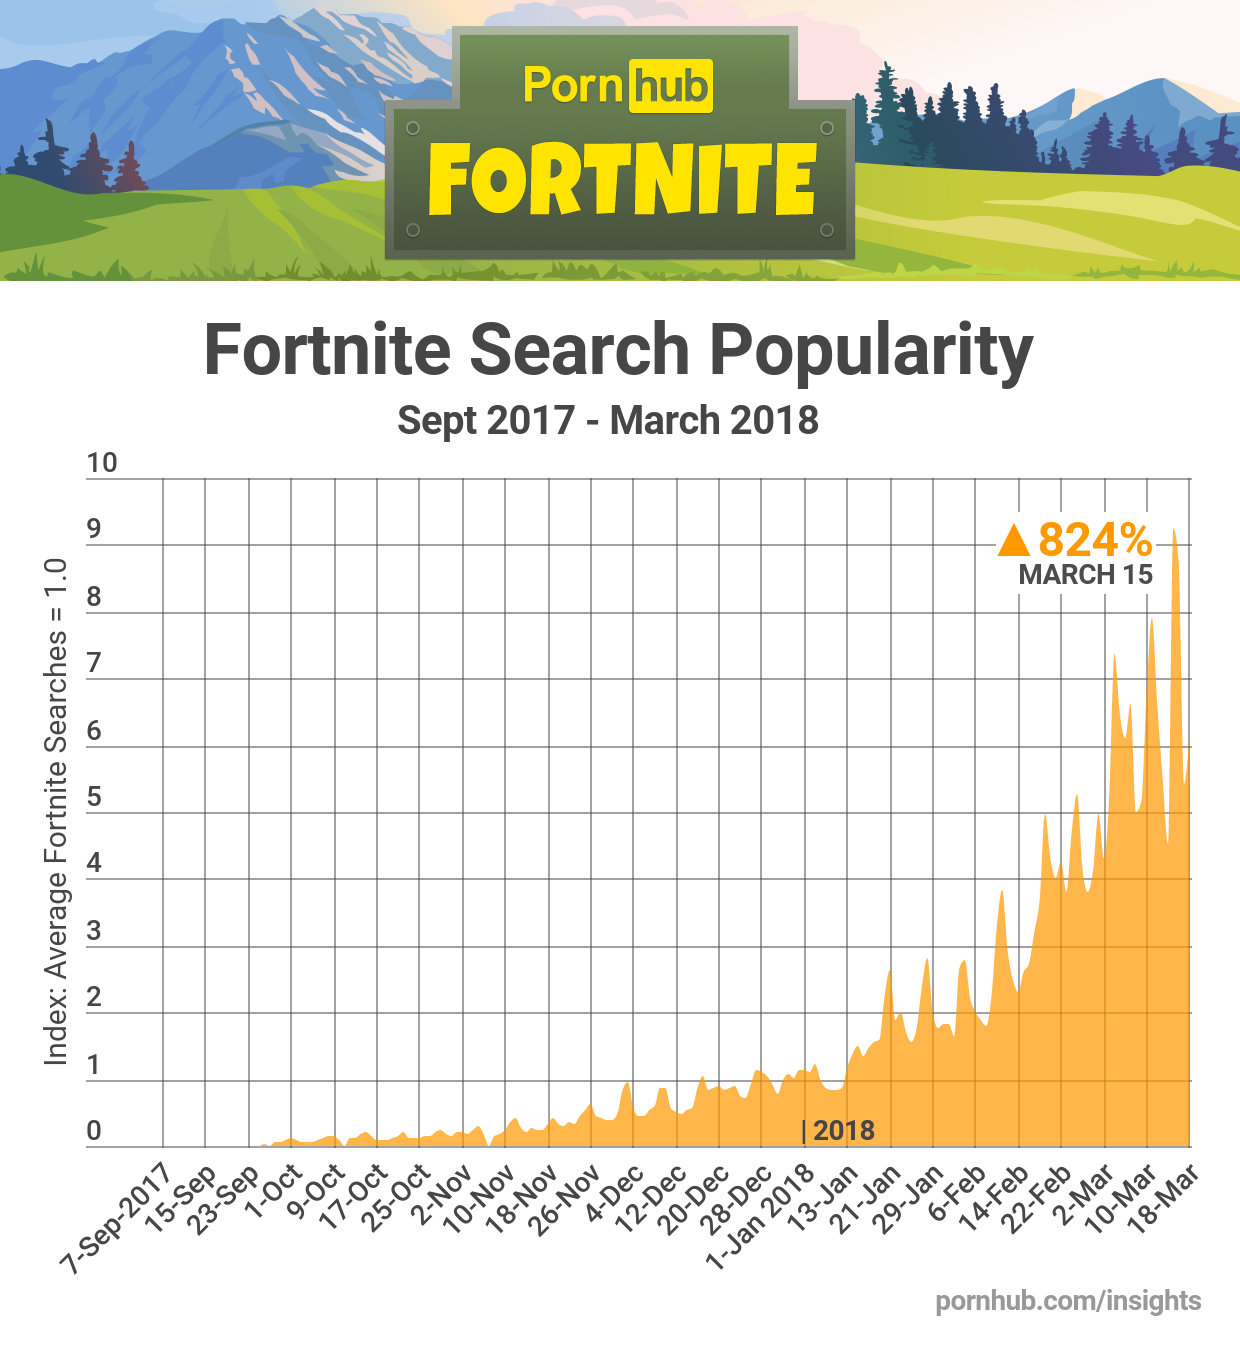 Cifra de busqueda de Fortnite en Pornhub